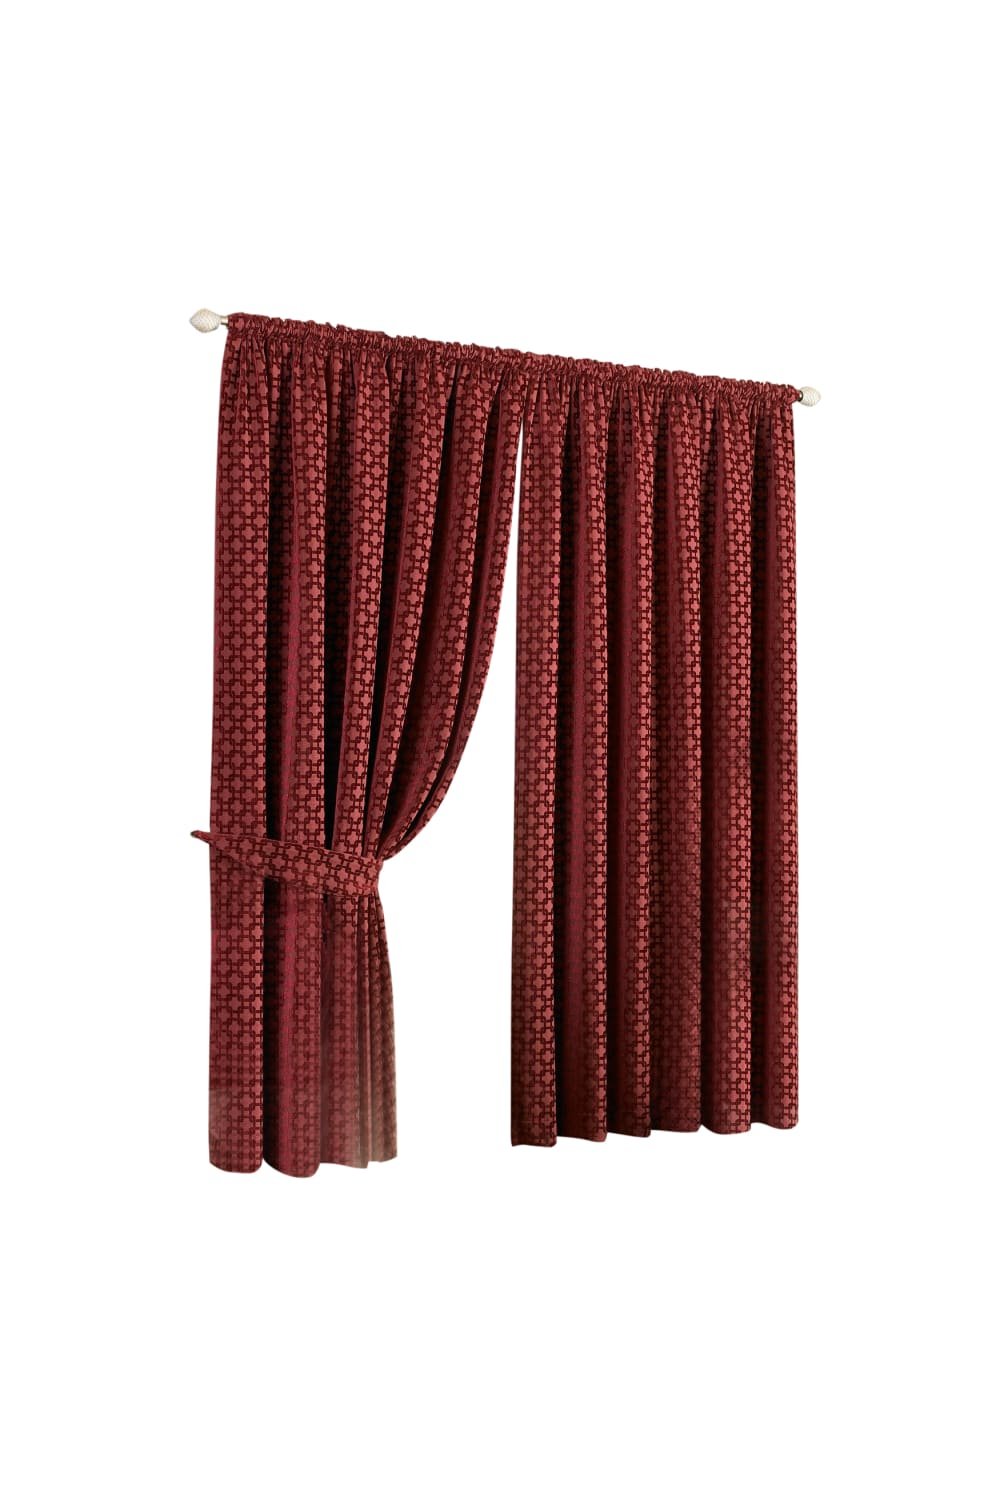 Riva Home Belmont Pencil Pleat Curtains (Claret) (66 x 72 inch)